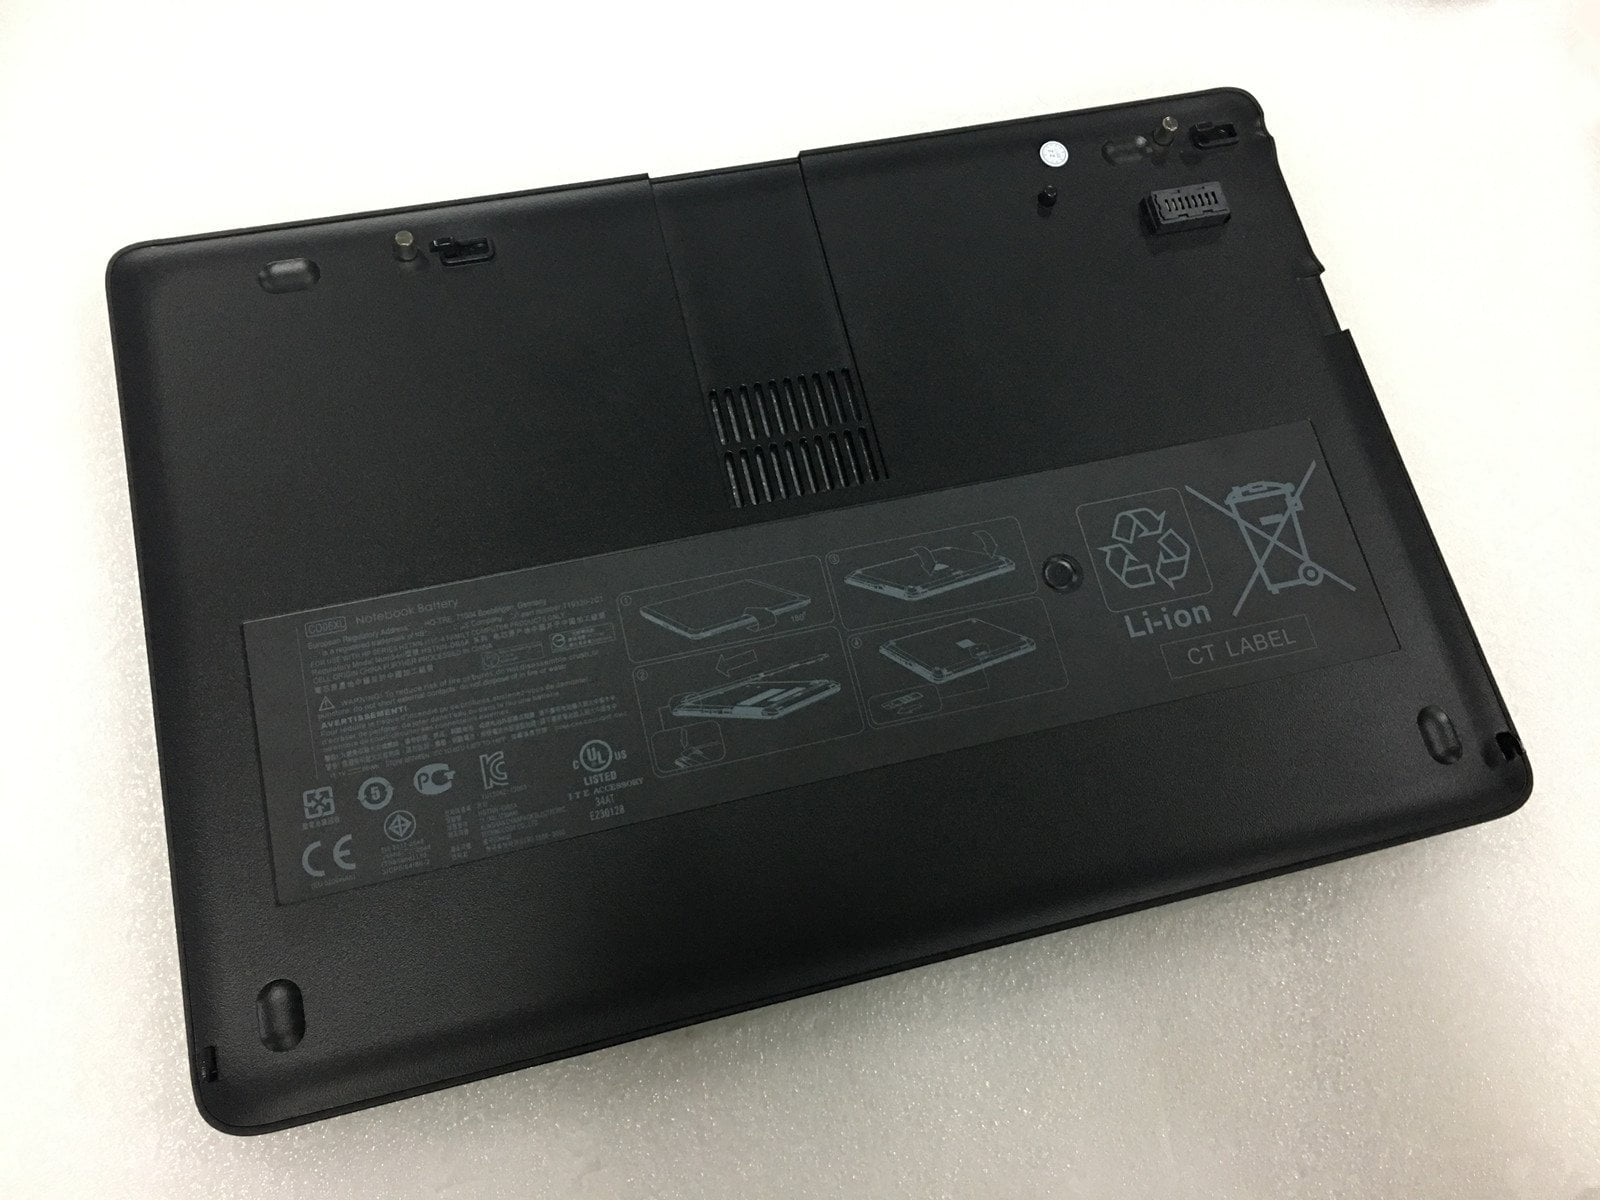 New 60Wh CO06XL Ultra Extended Battery for HP EliteBook 840 G1 ZBook 14 E7U23AA - Walmart.com